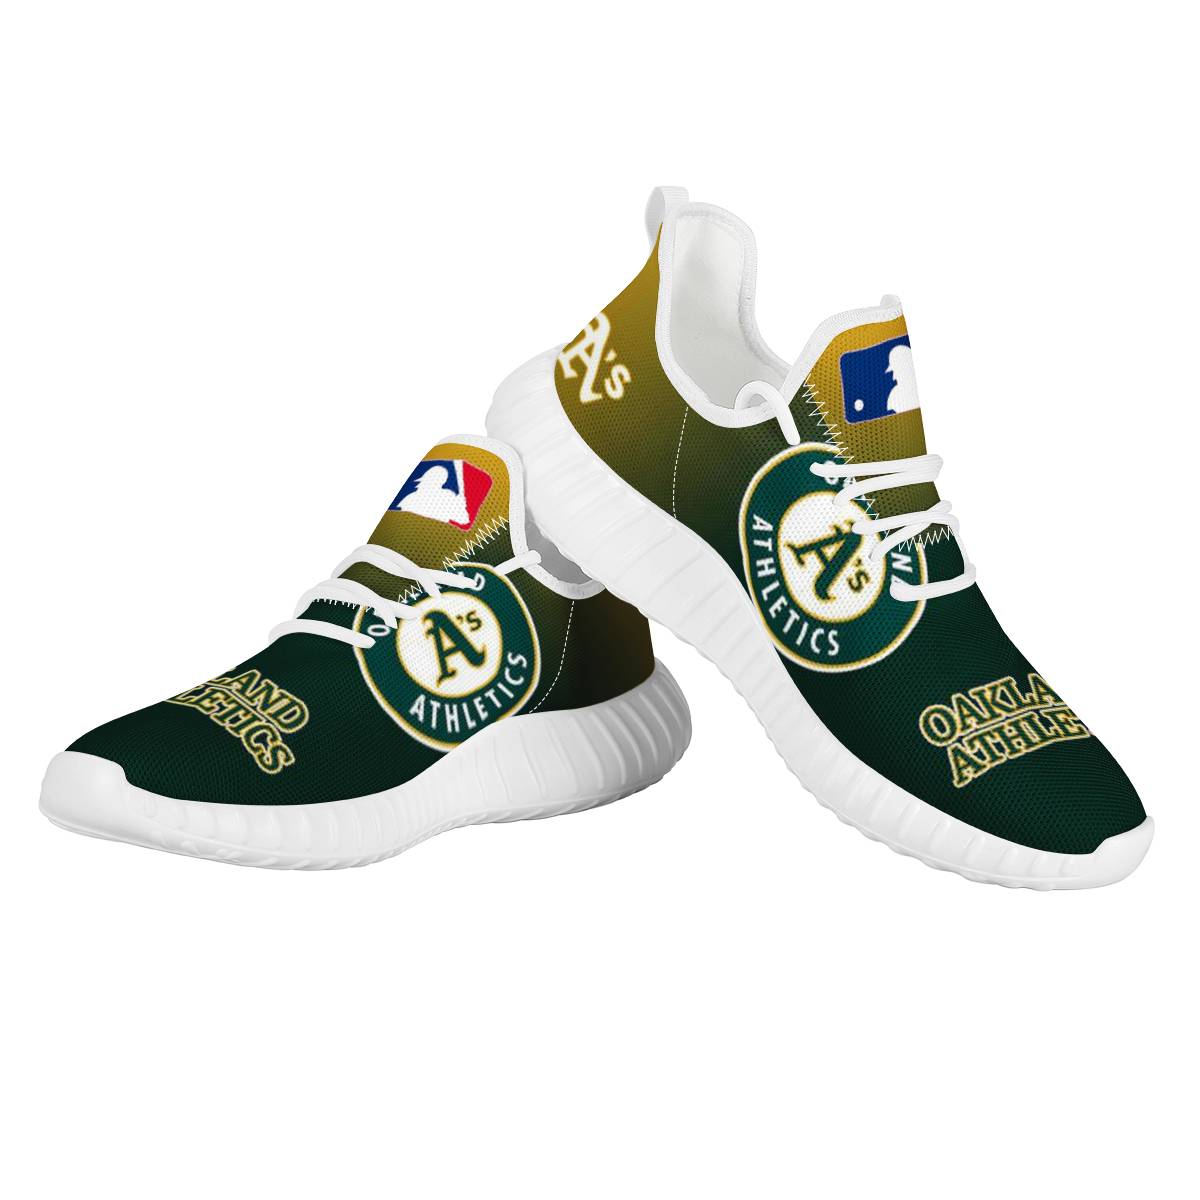 Oakland Athletics shoes